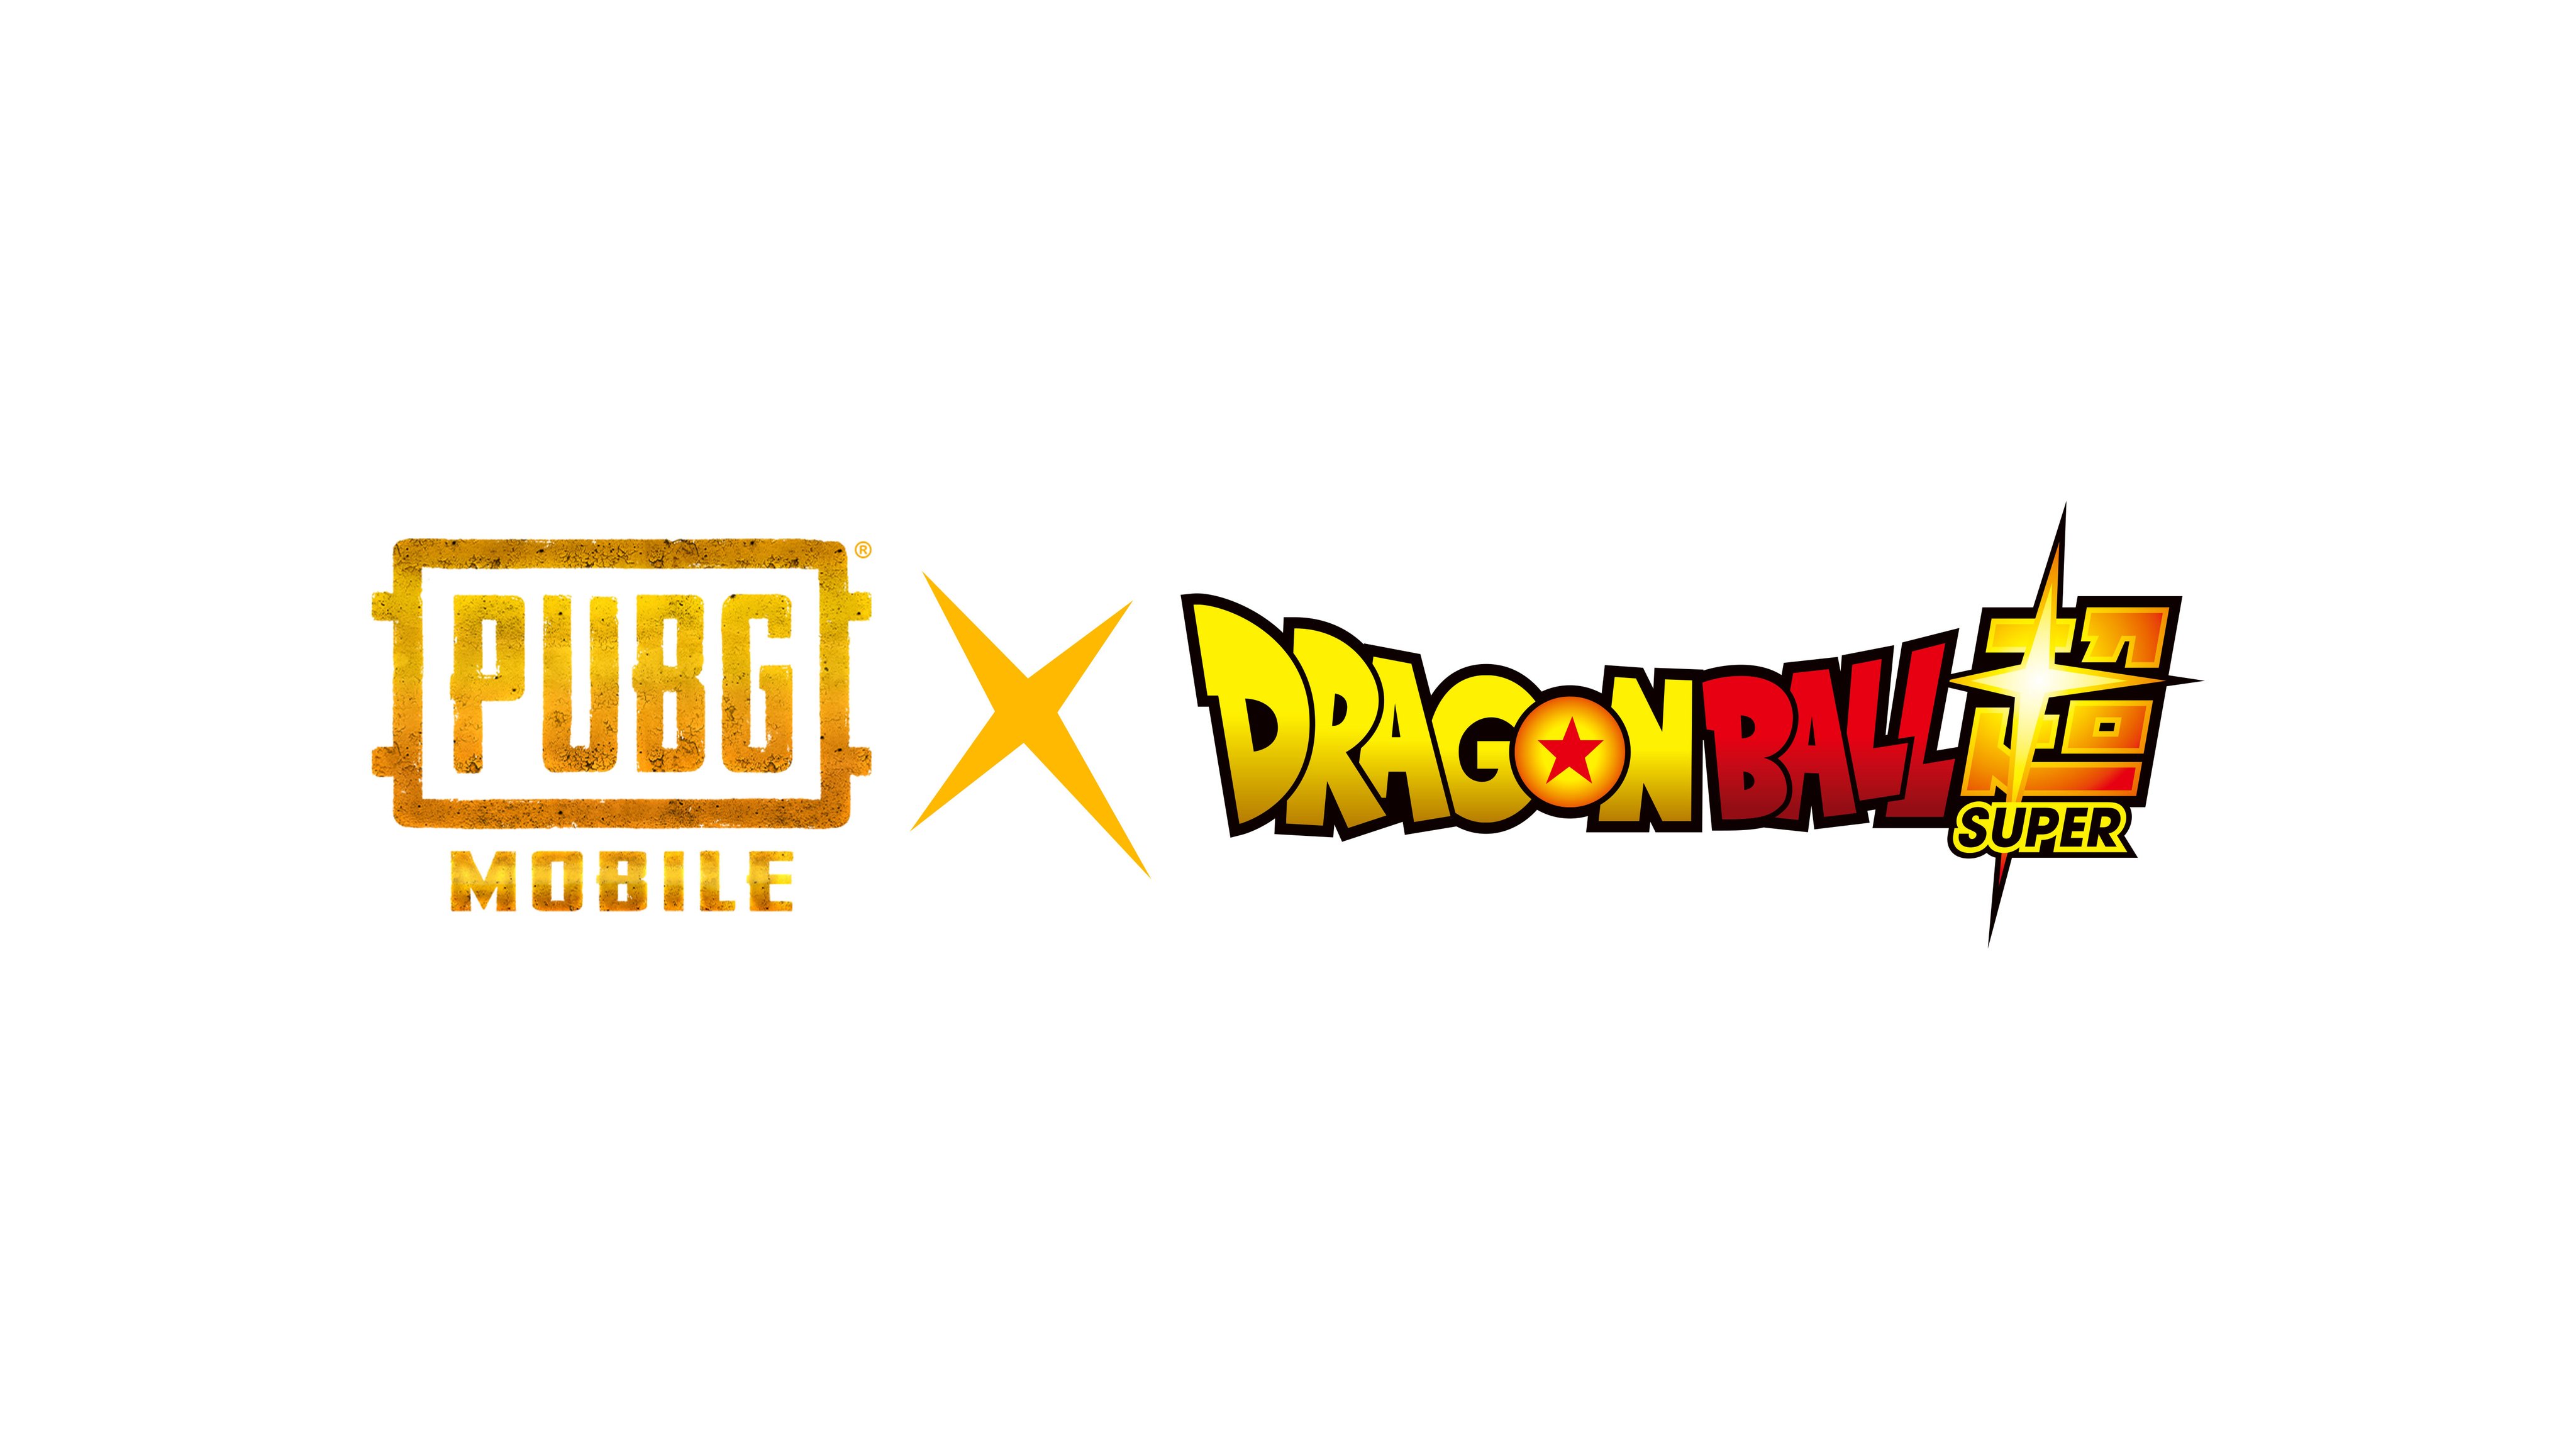 Dragon Ball Super x PUBG móvil